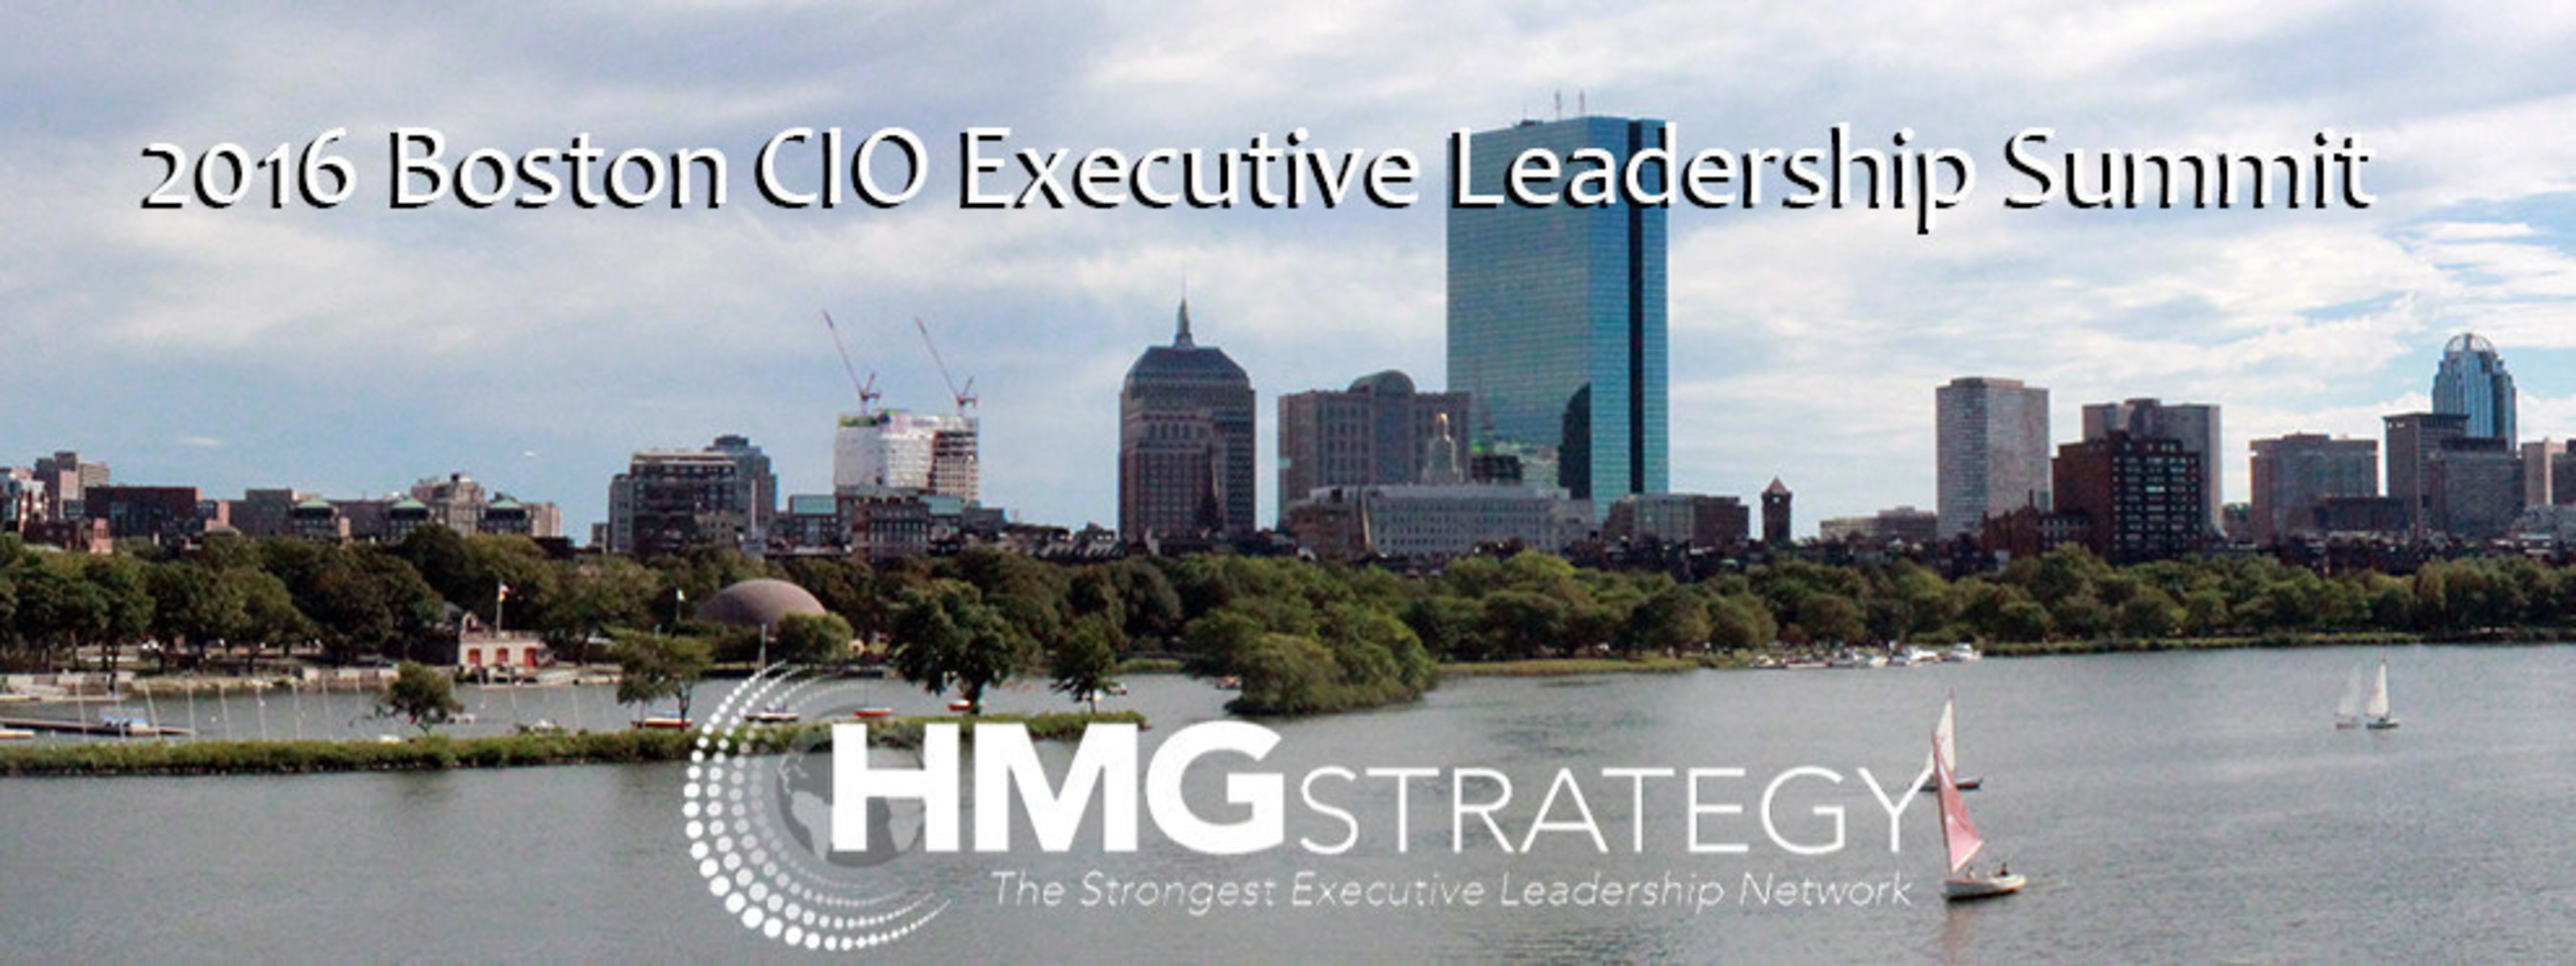 Register Now for the 2016 Boston CIO Executive Leadership Summit!